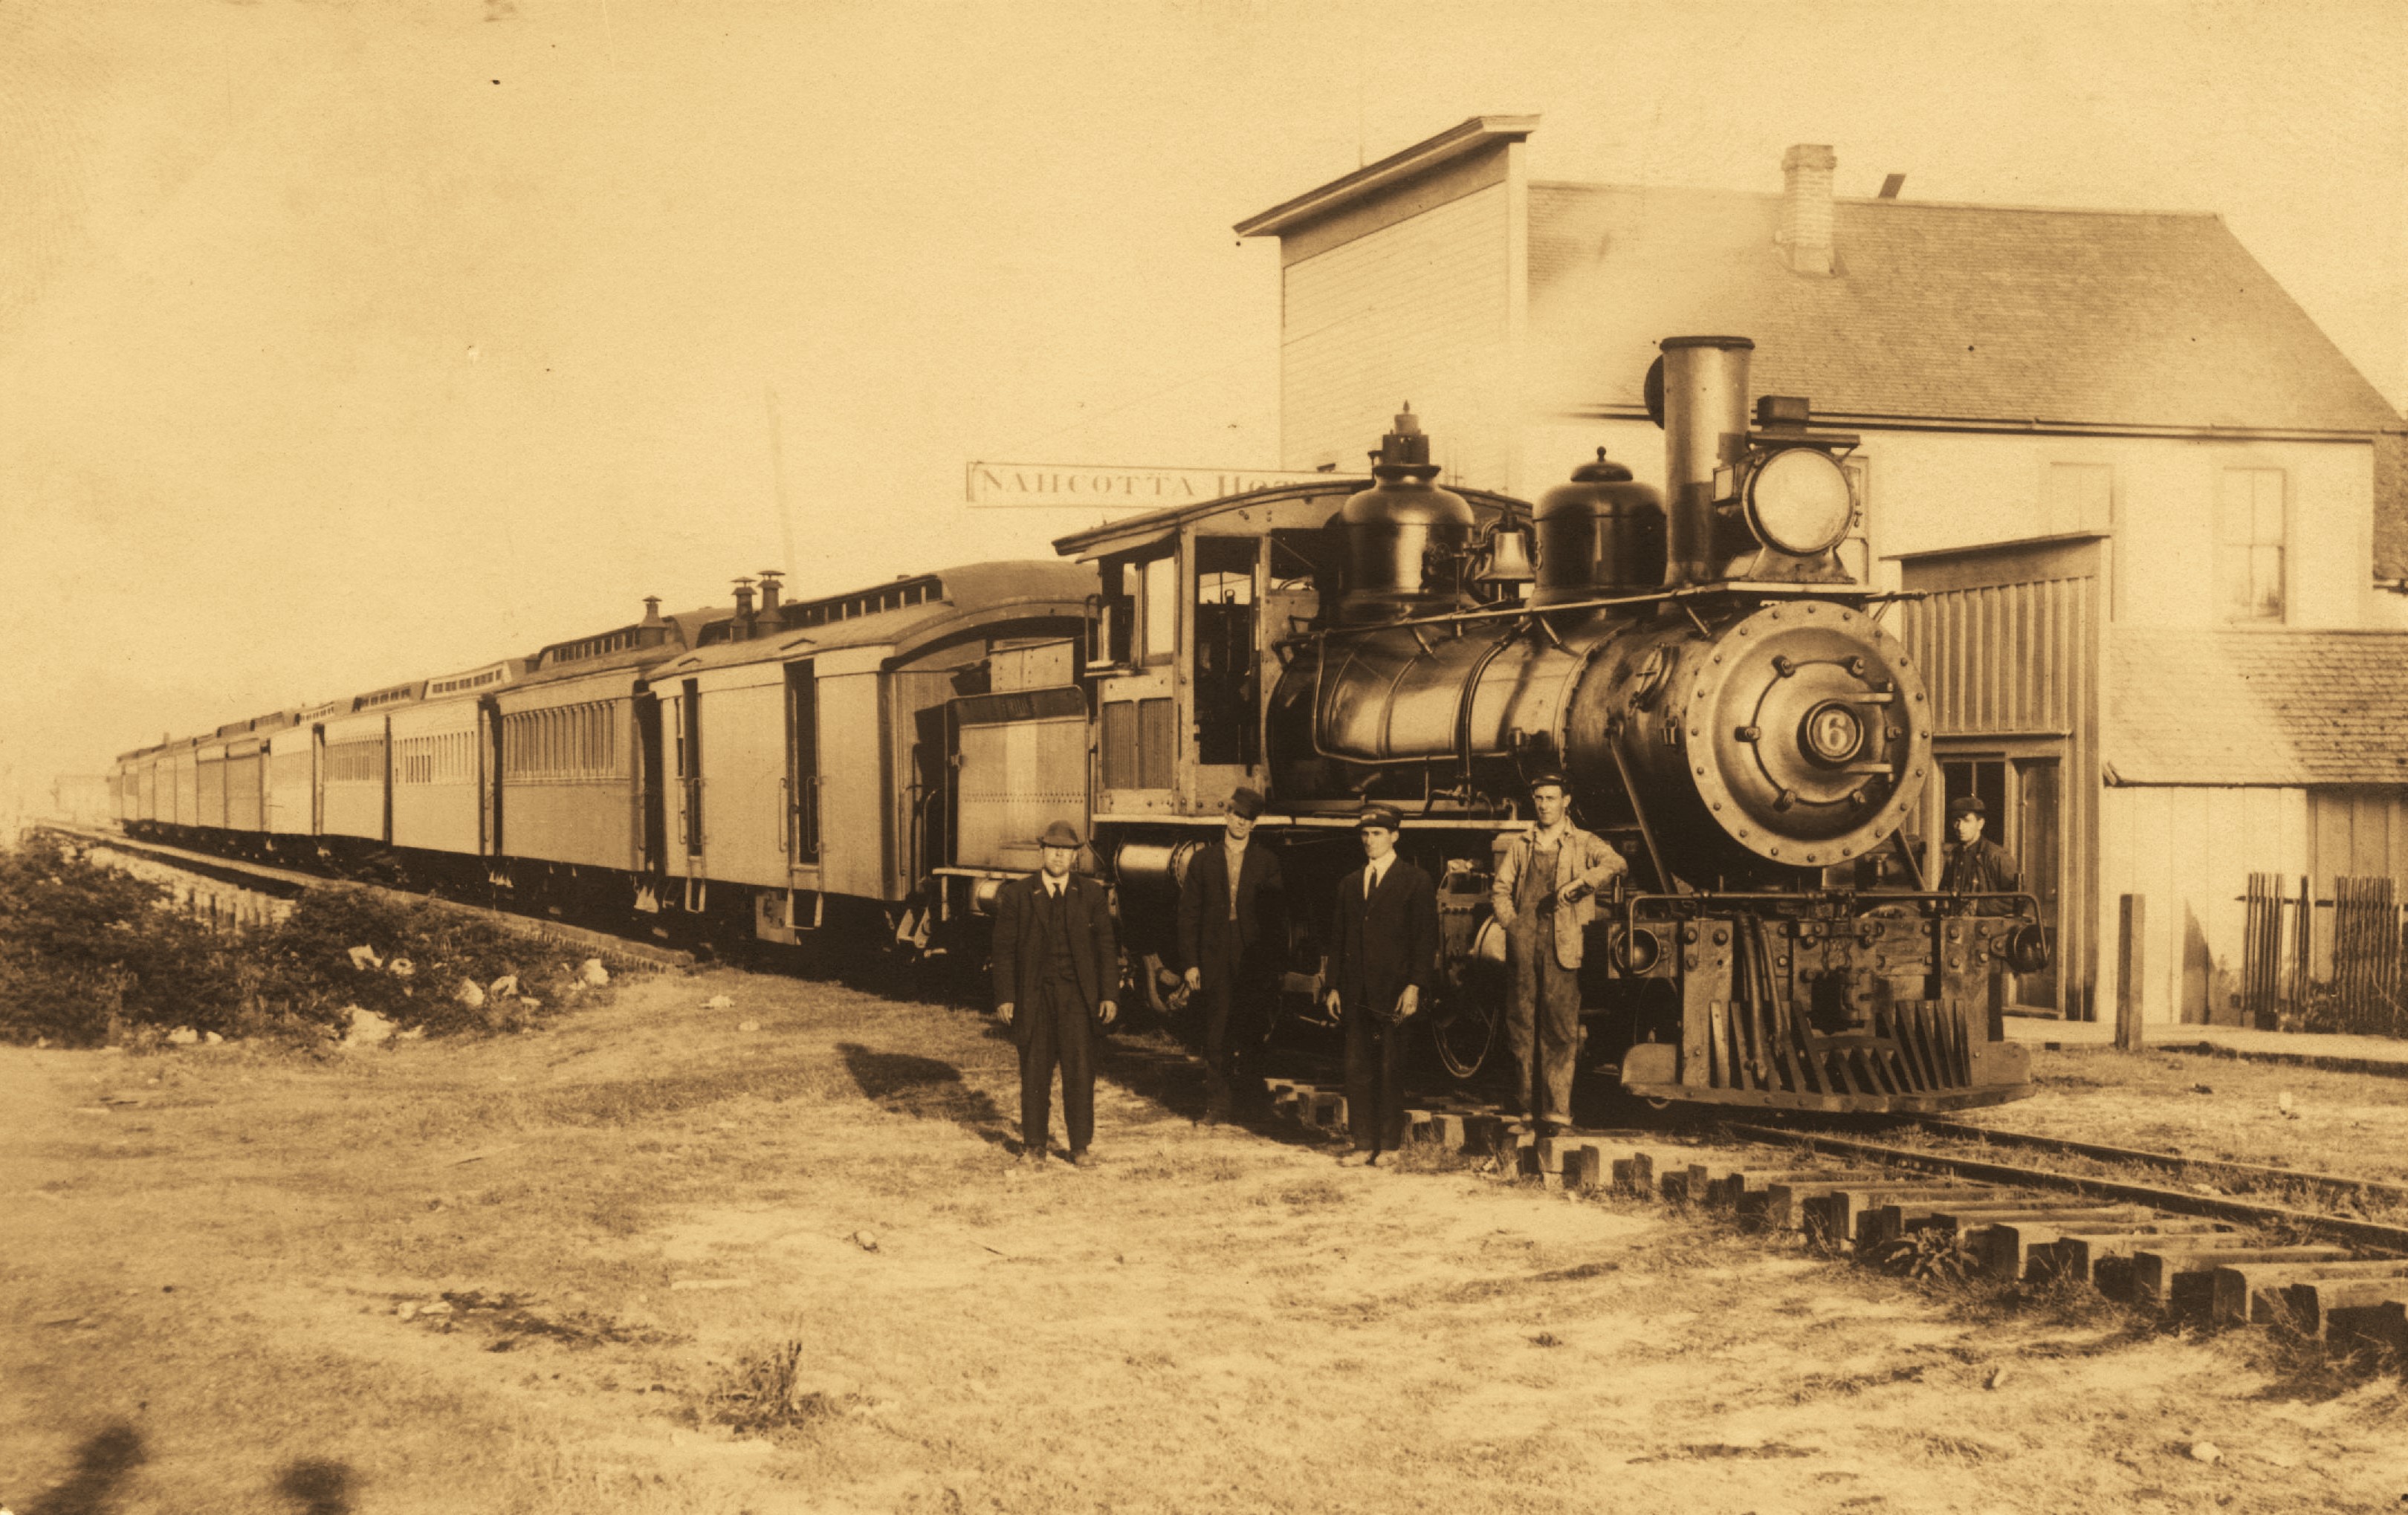 Clamshell Railroad